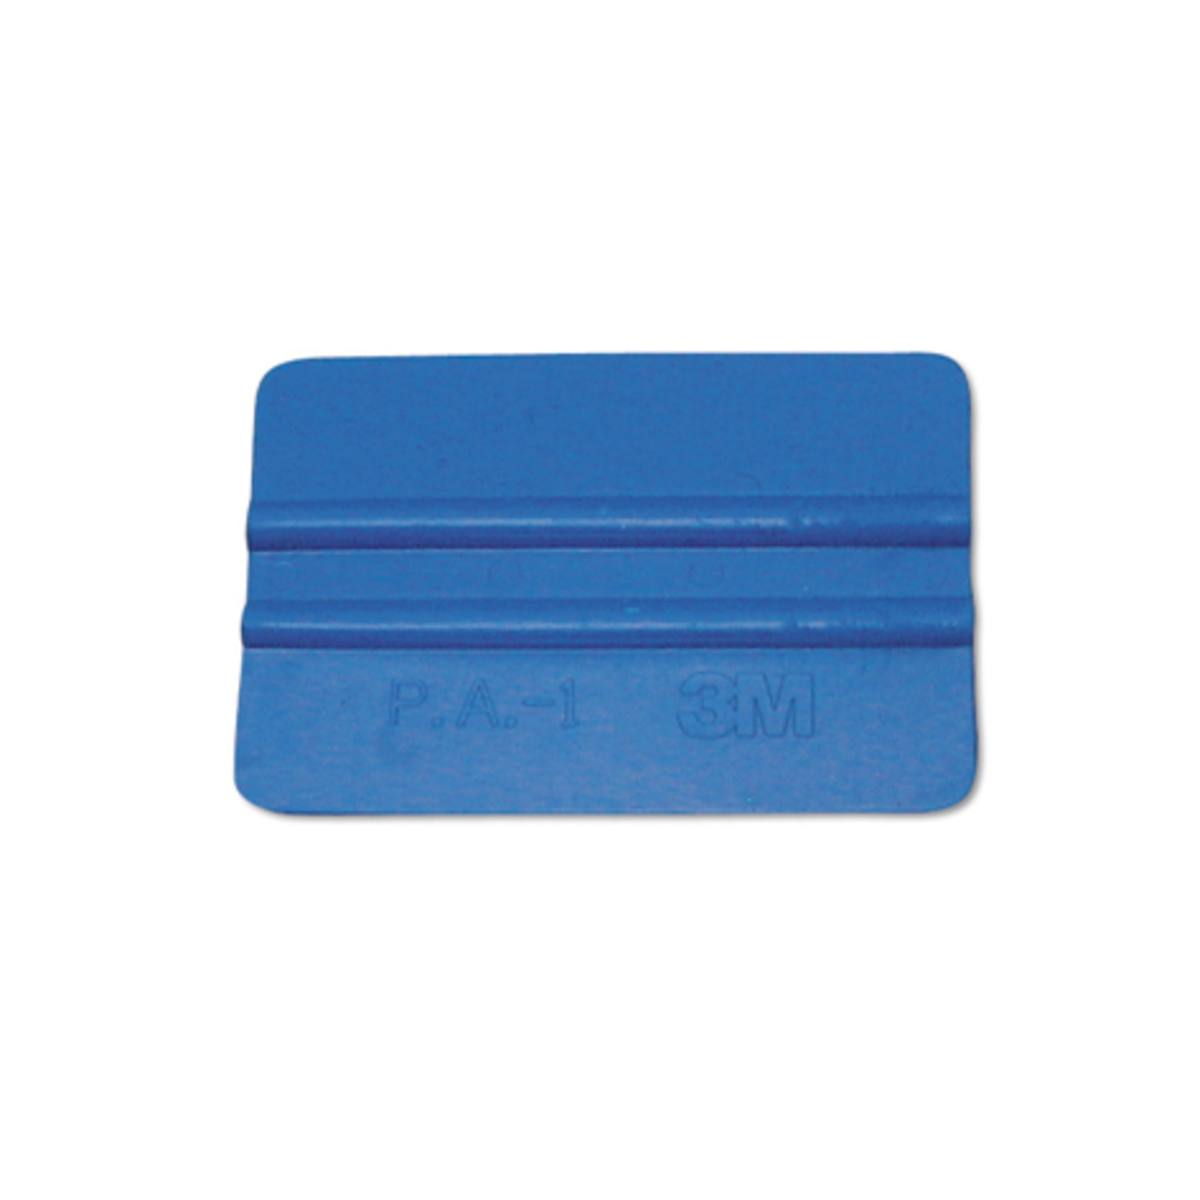 Spatola in plastica 3M, blu scuro (bassa durezza) 100mmx70mm